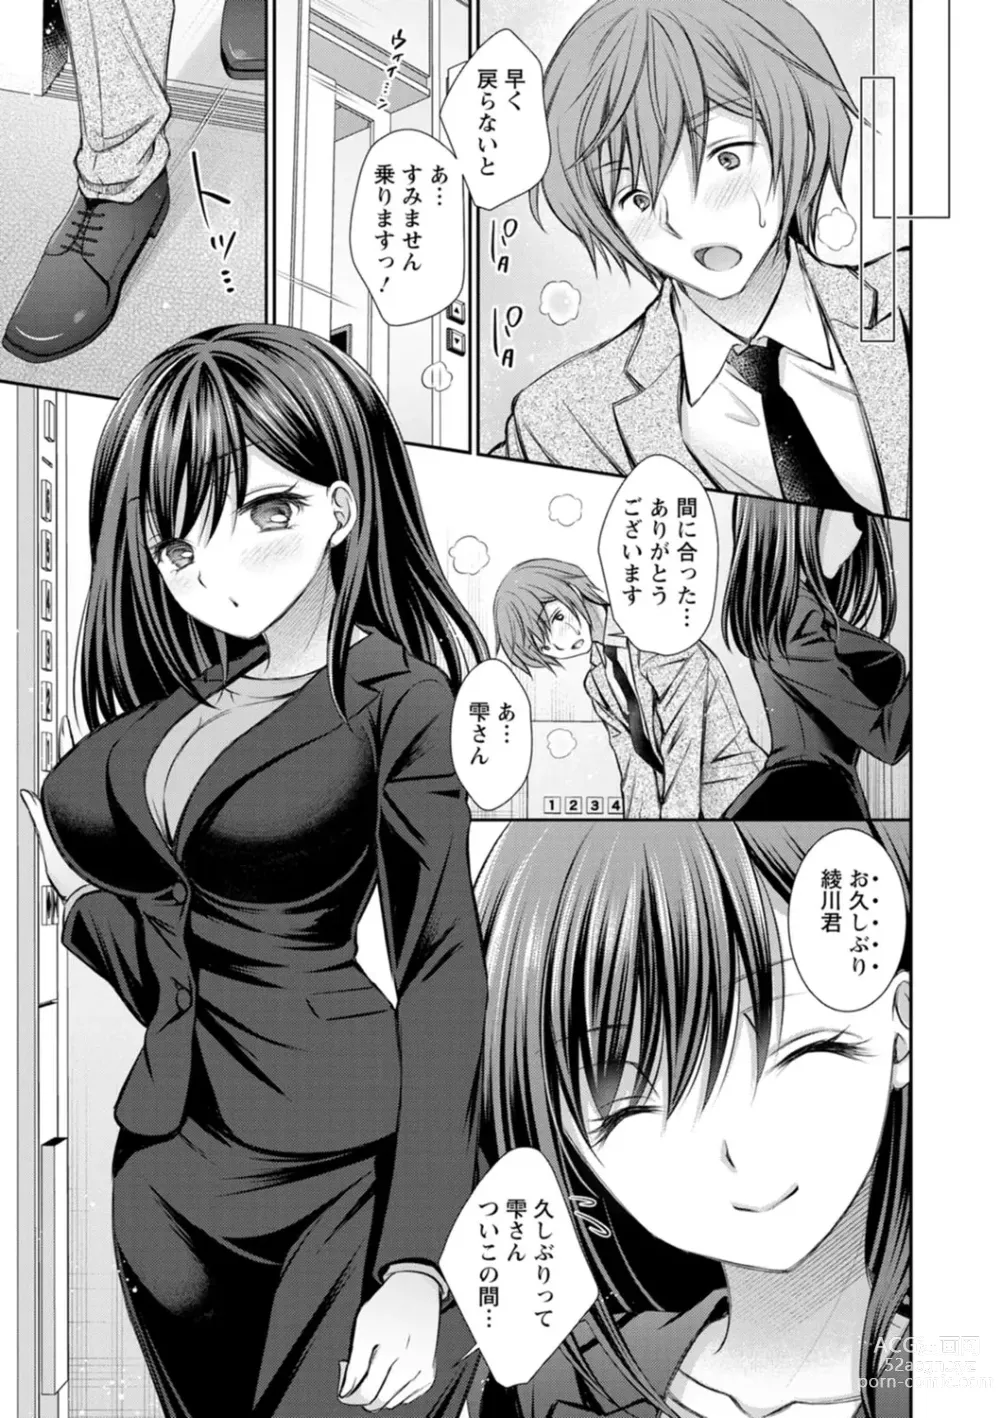 Page 7 of manga Furete Mitakute.